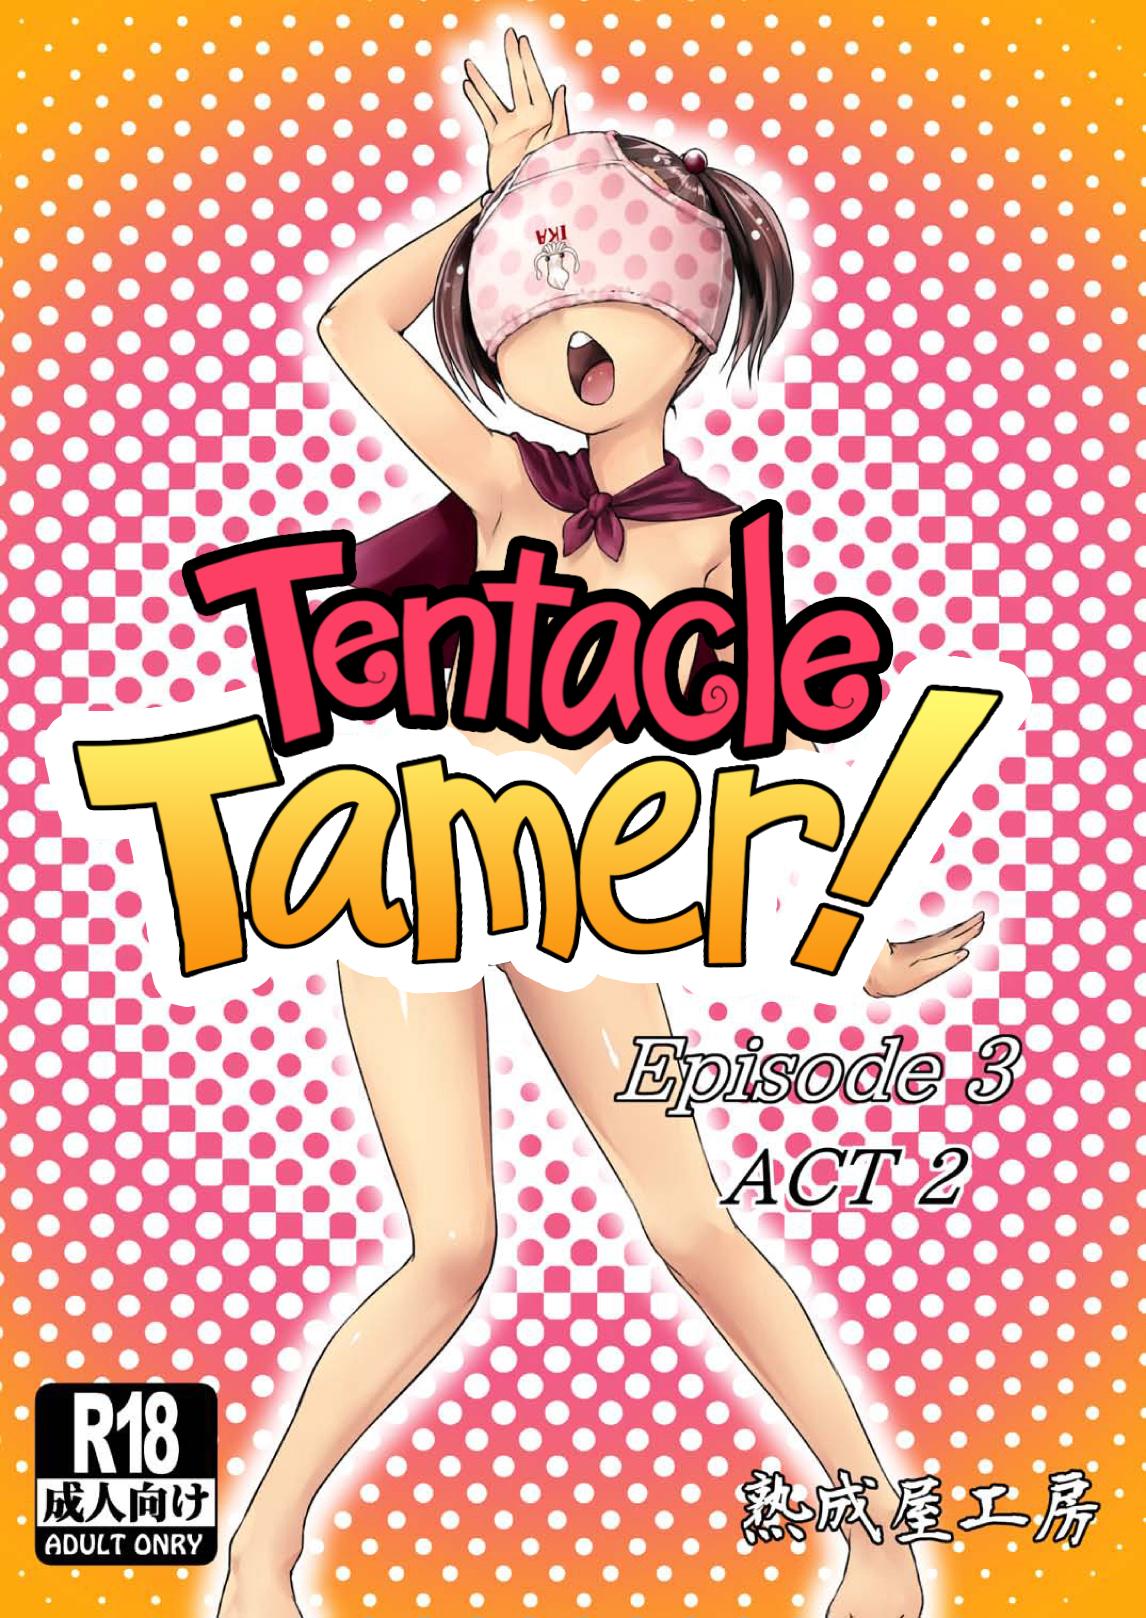 Tentacle Tamer! Episode 3 Act 2 1